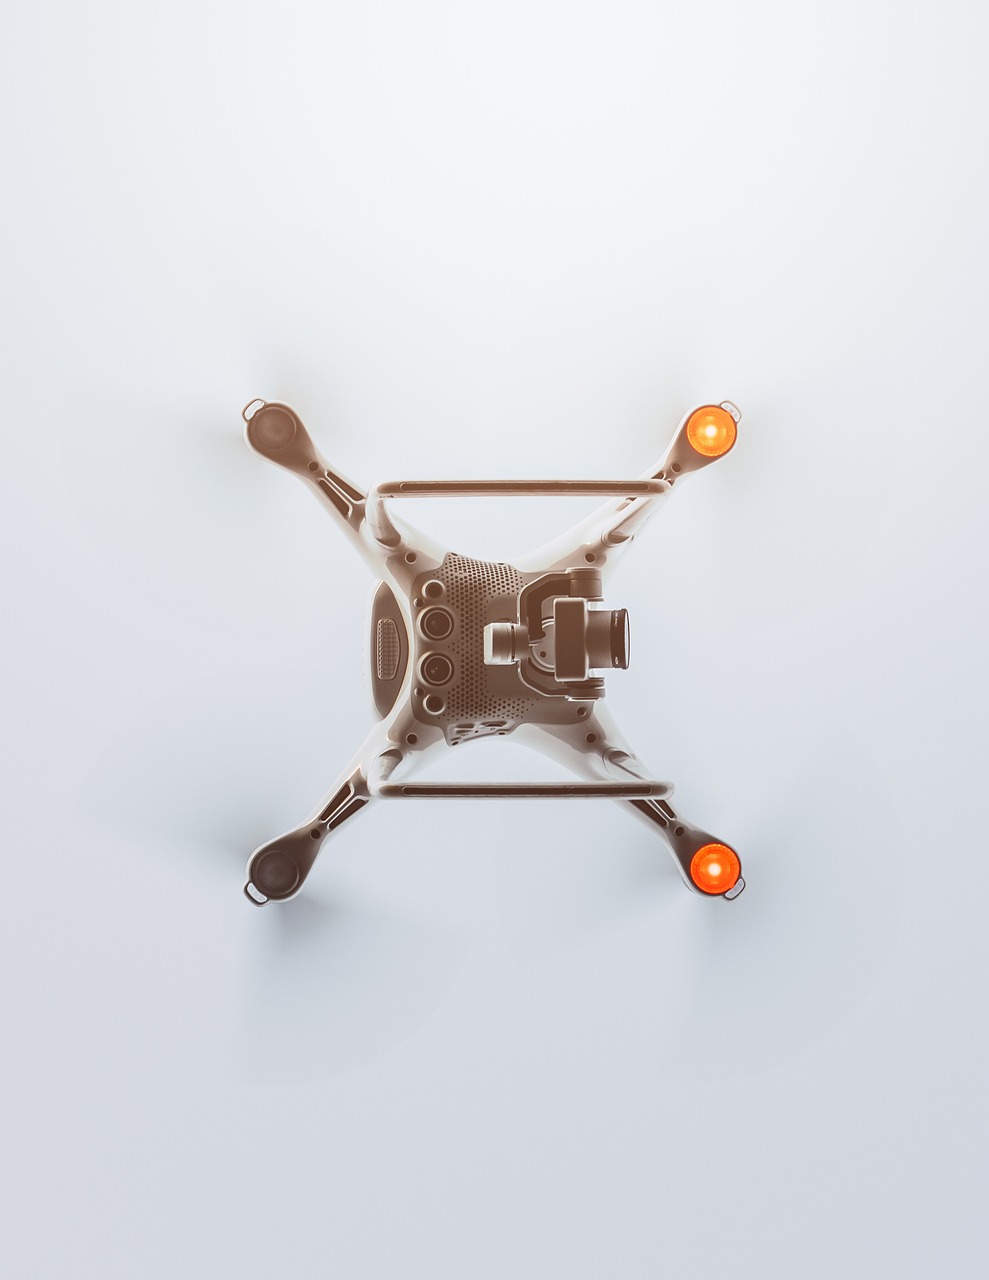 drone camera dji free photo